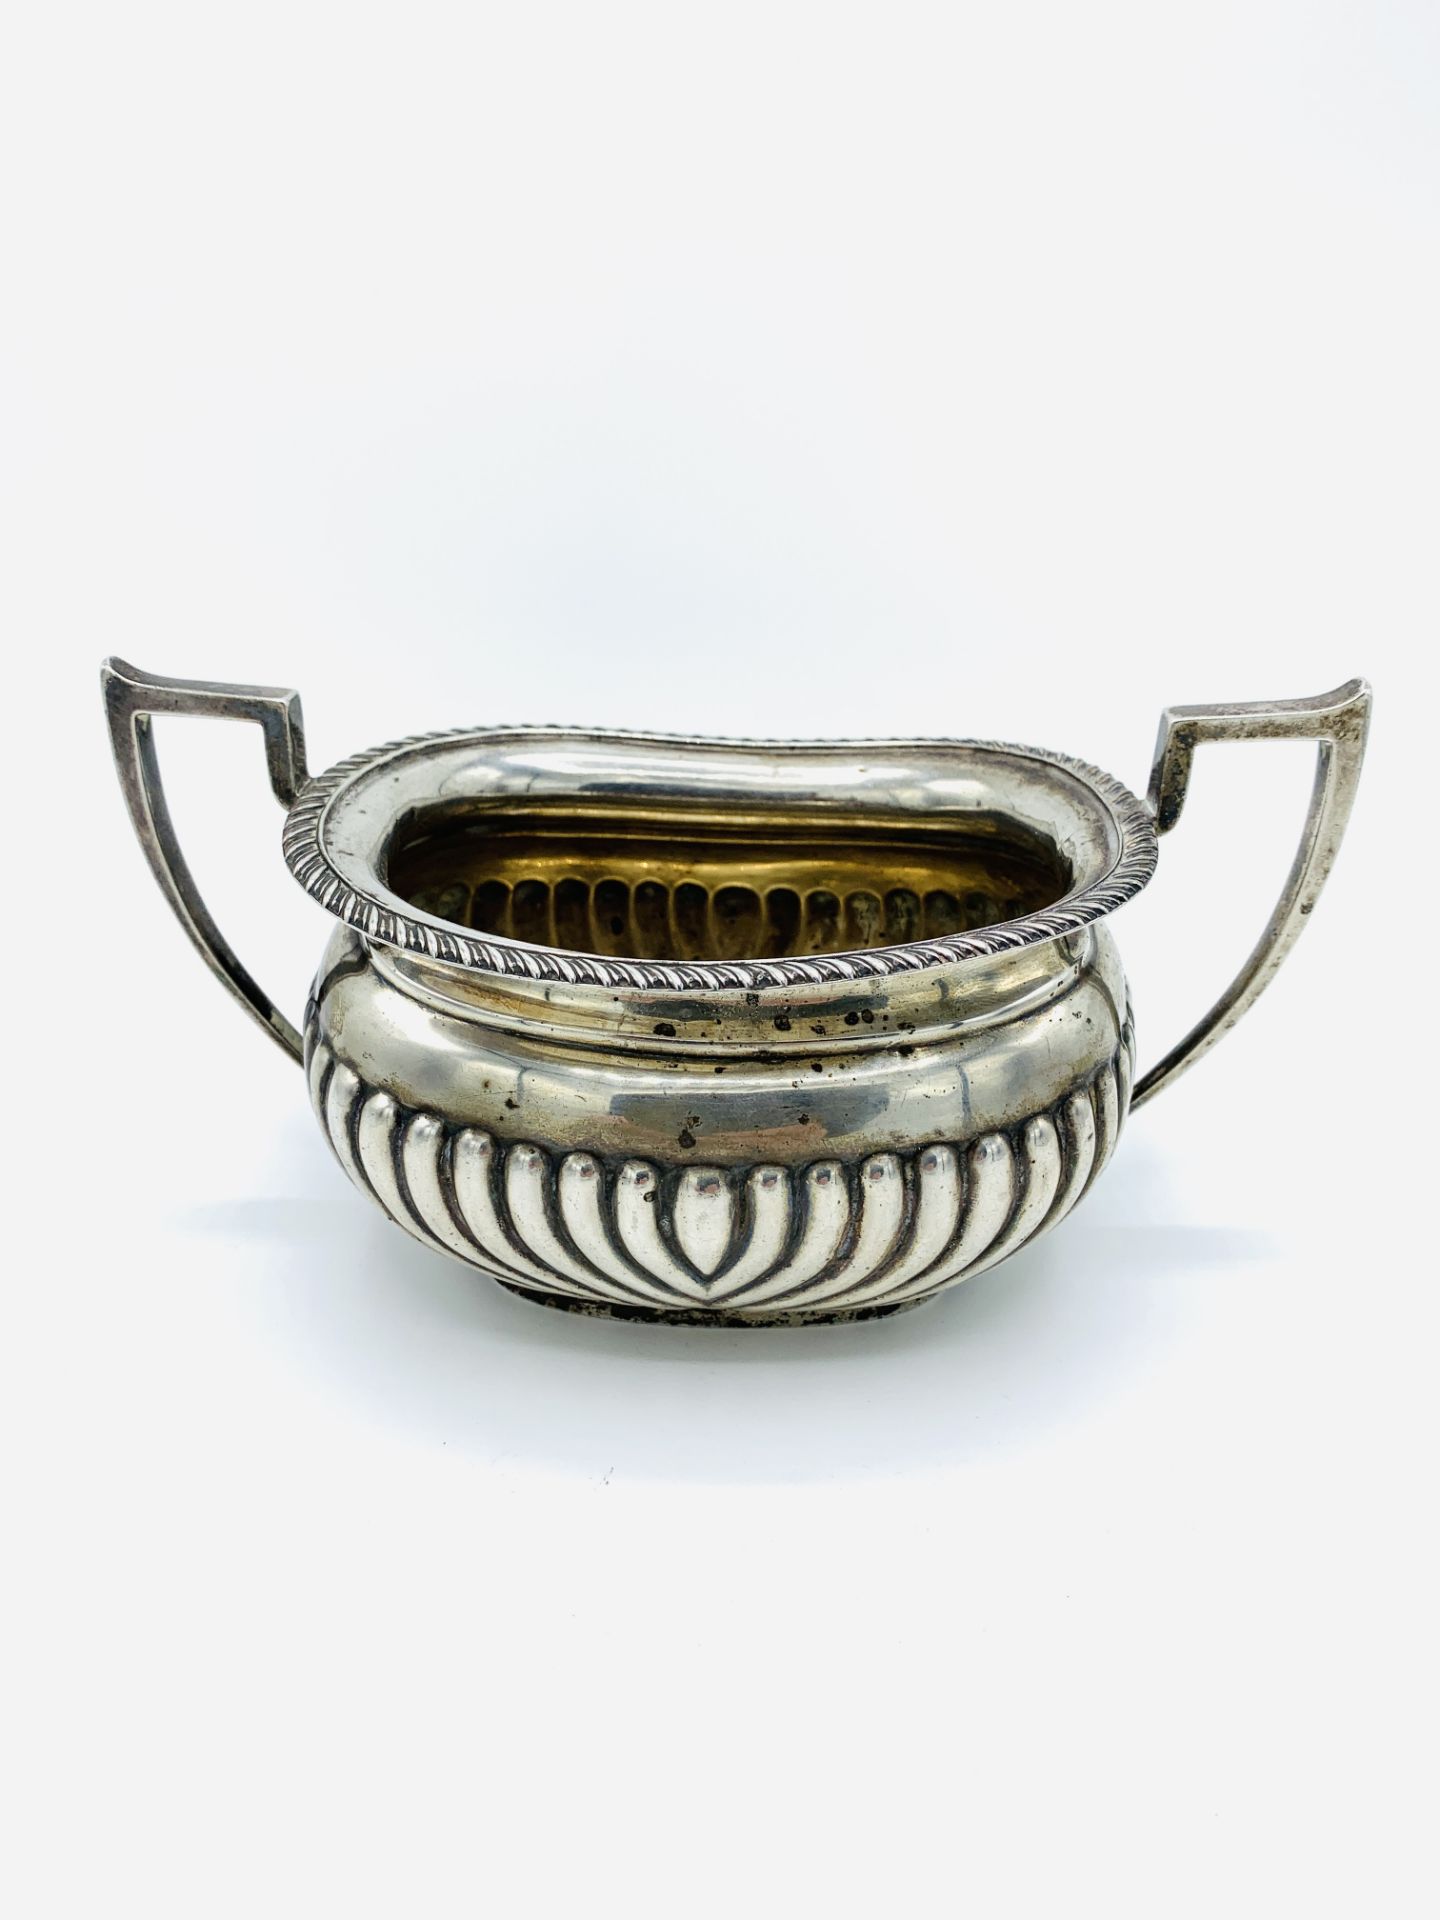 Large silver creamer and sugar bowl - Image 4 of 5